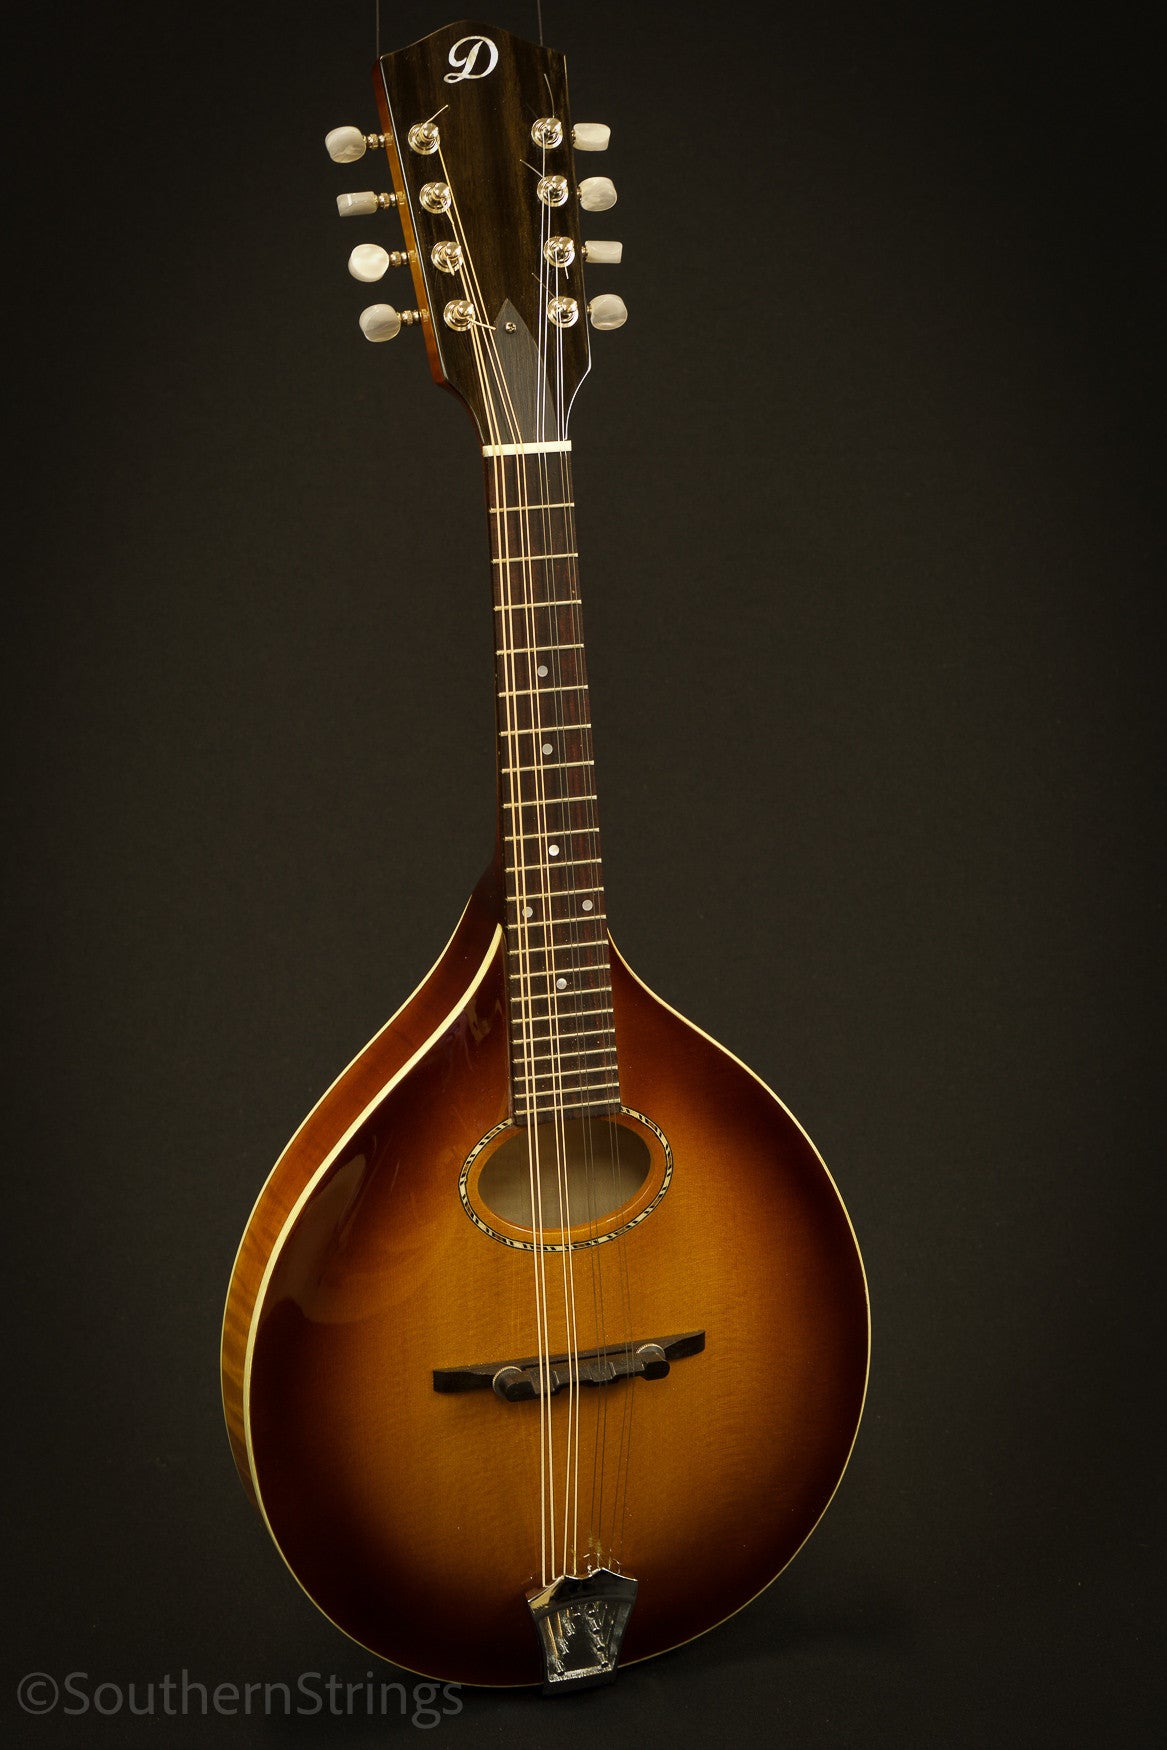 Docherty "Tyne" A Model Mandolin